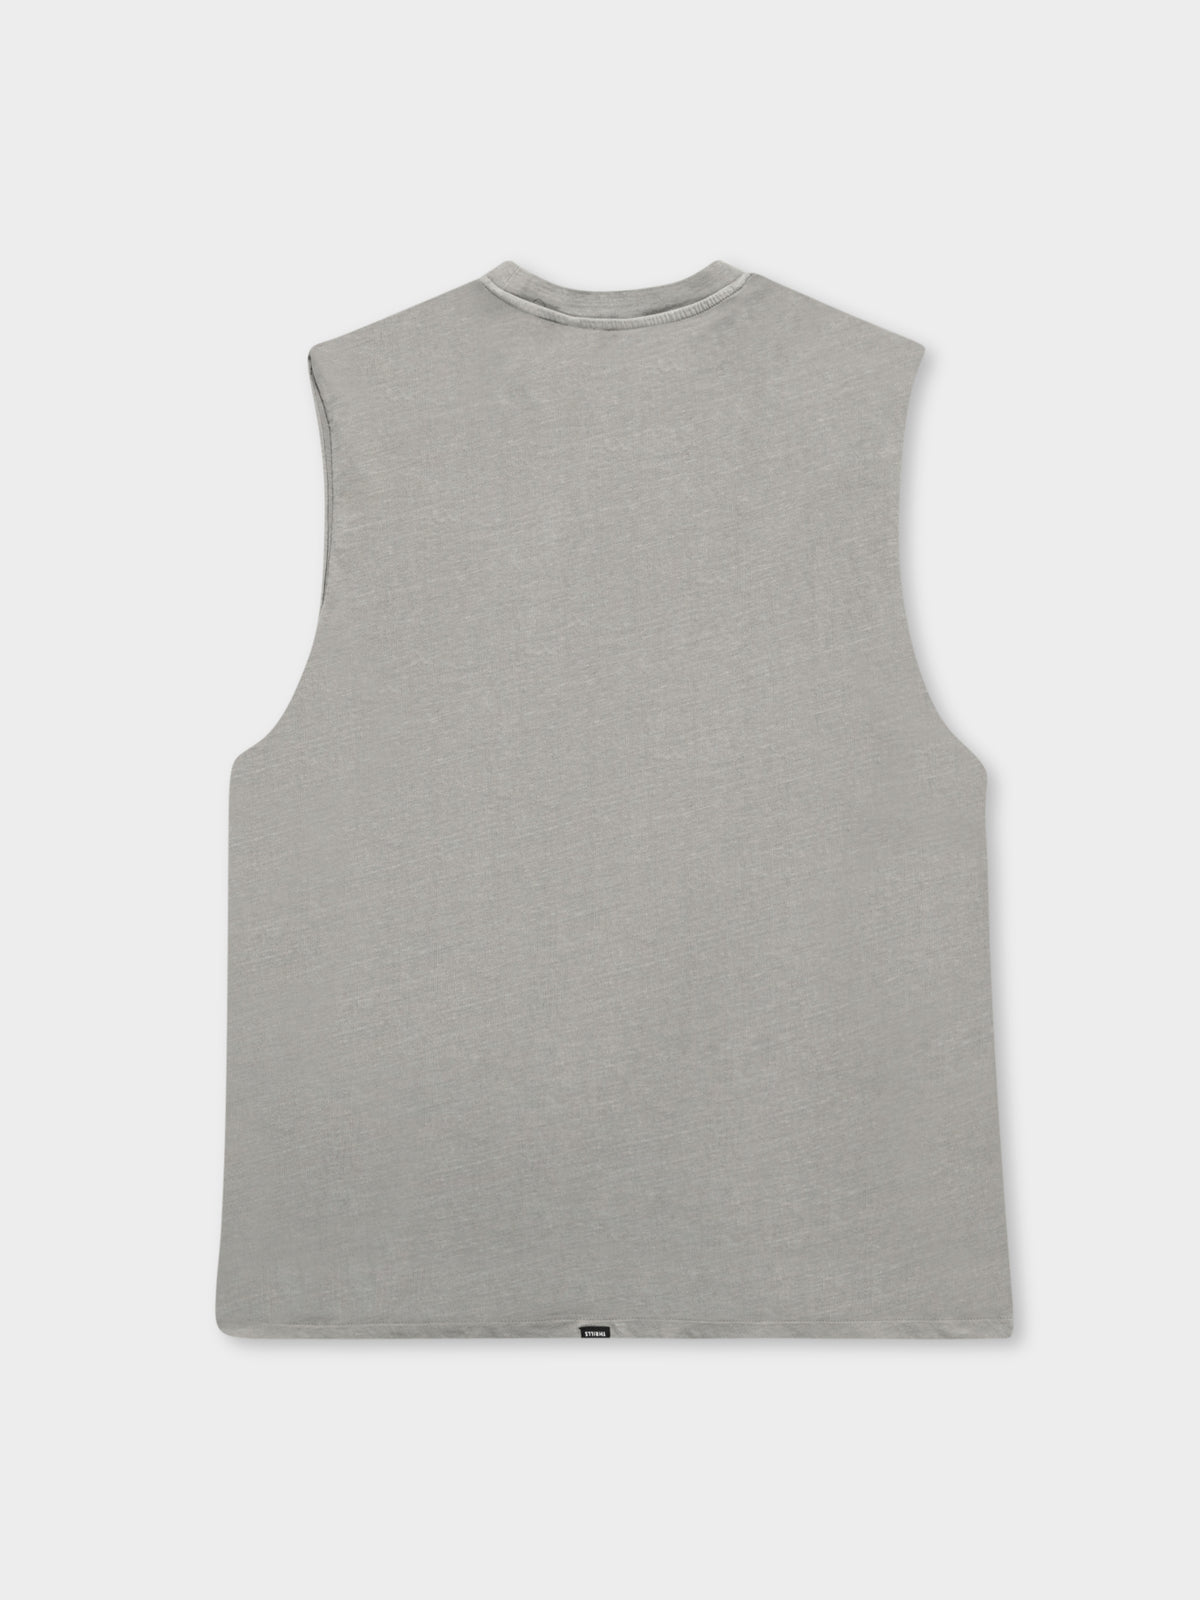 Minimal Thrills Merch Fit T-Shirt in Grey